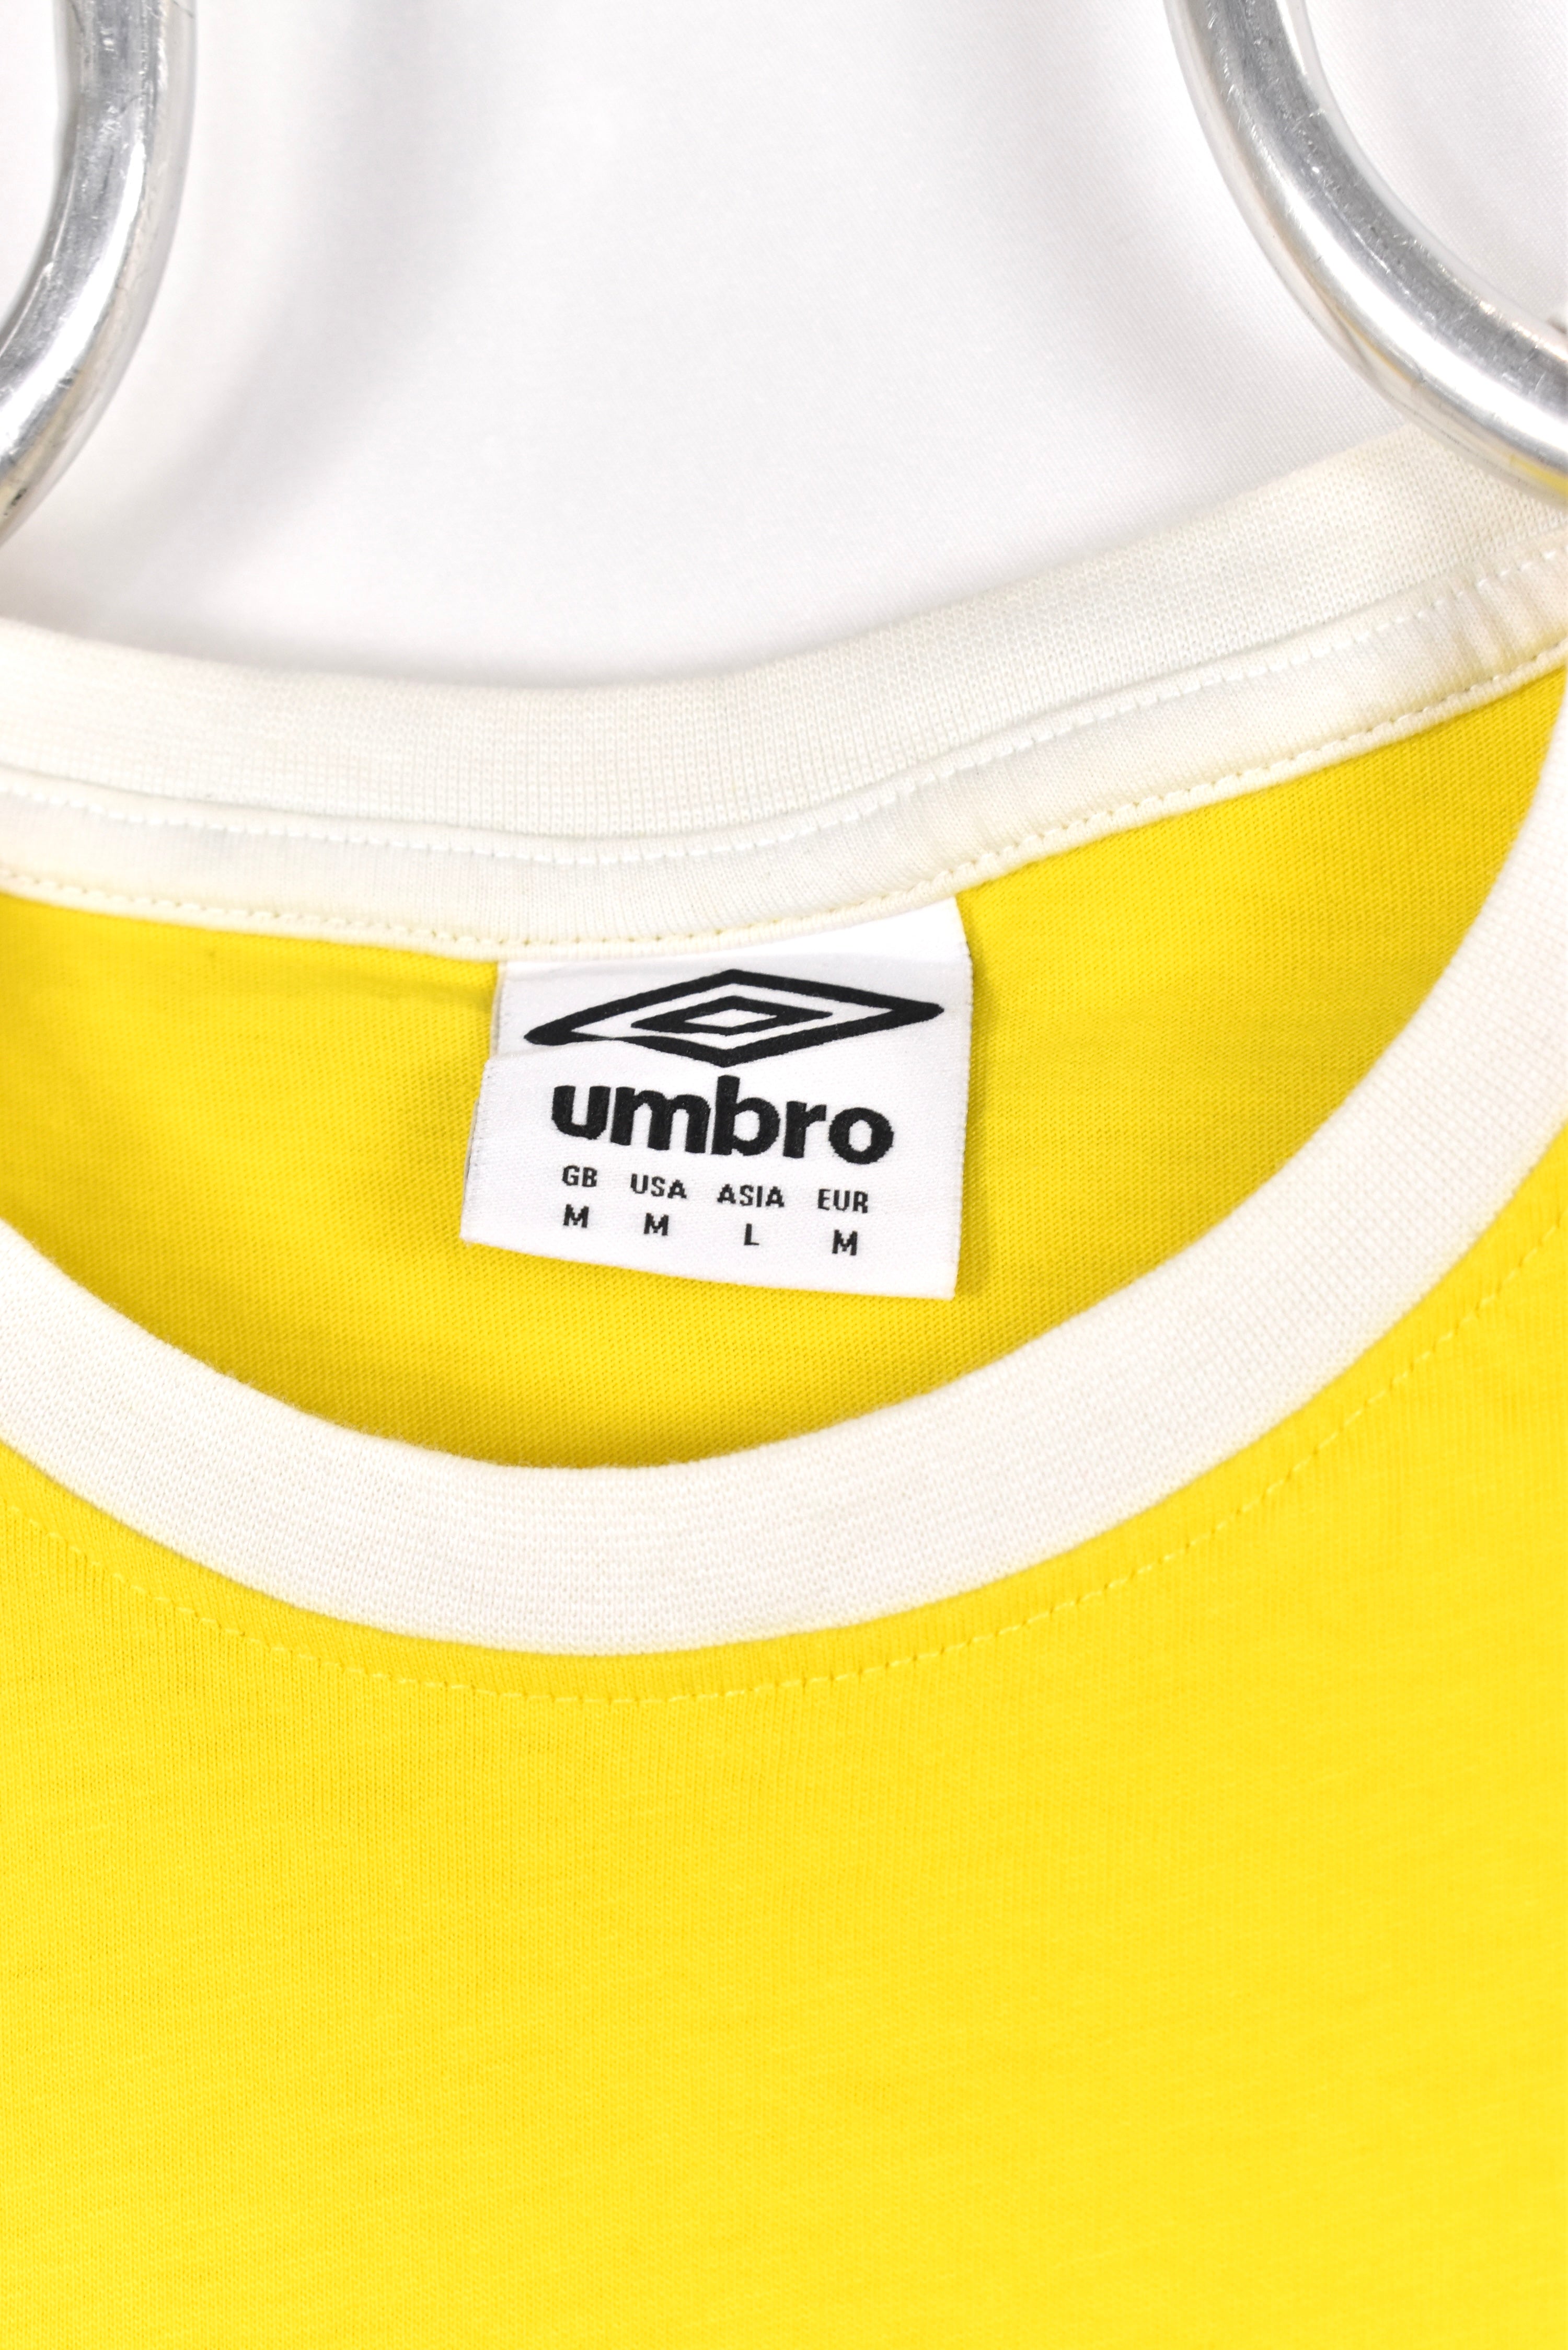 Women's vintage Umbro shirt, yellow graphic tee - AU M NIKE